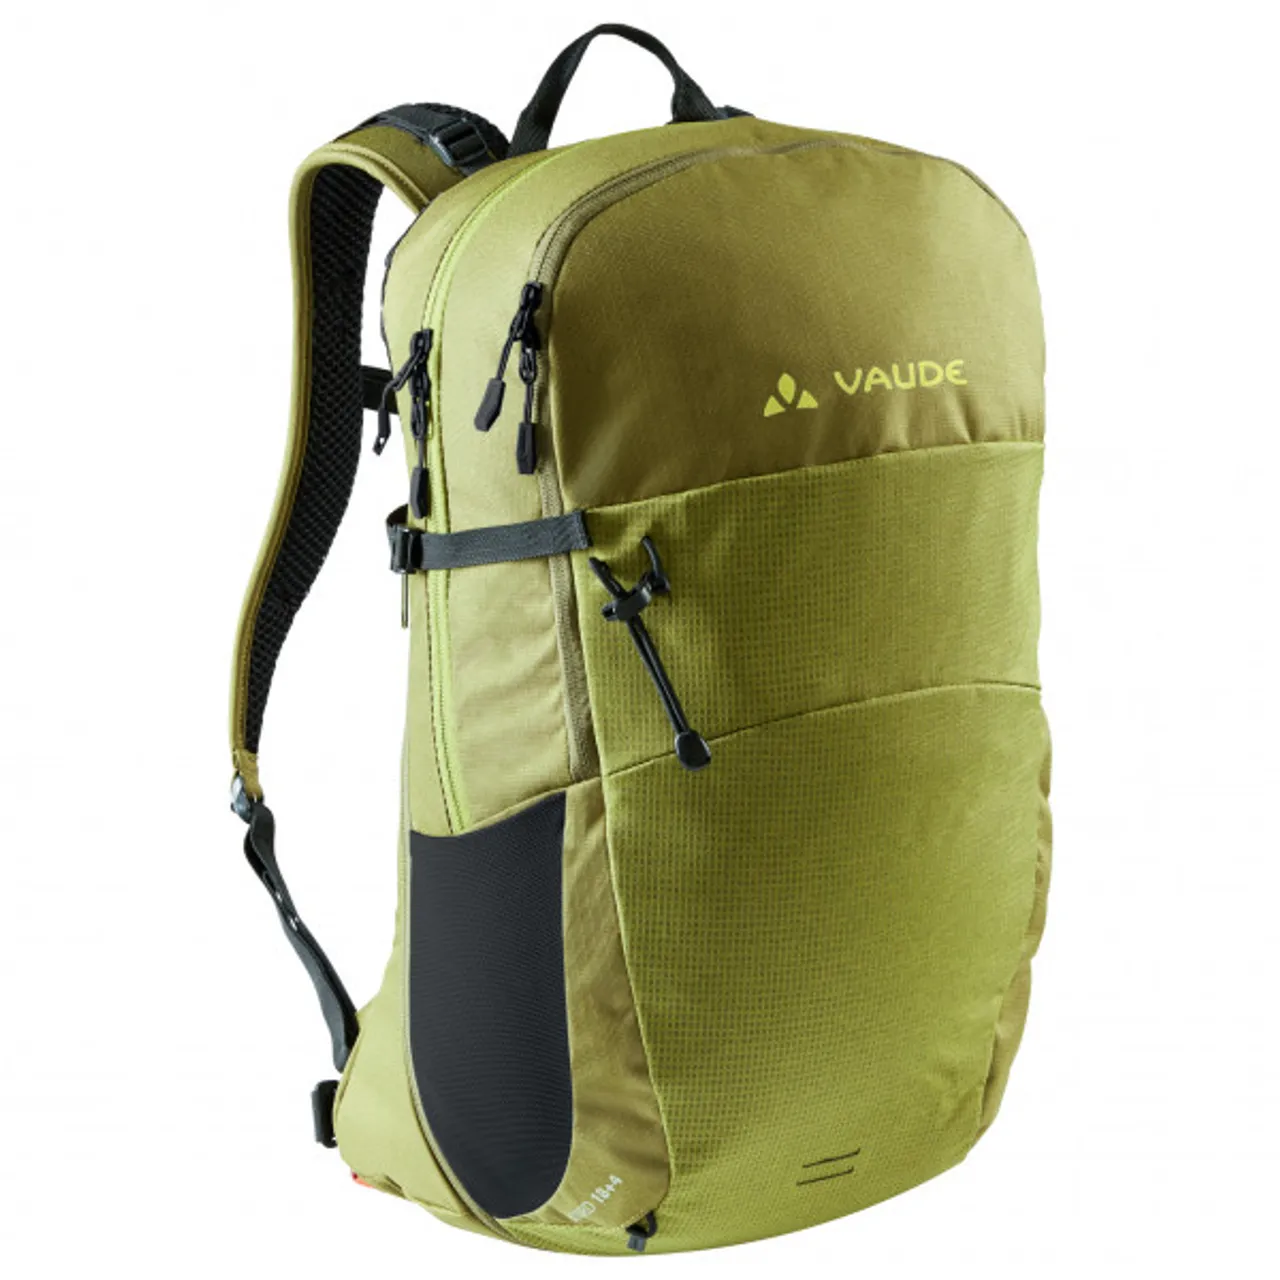 Vaude - Wizard 18+4 - Walking backpack size 18+4 l, olive